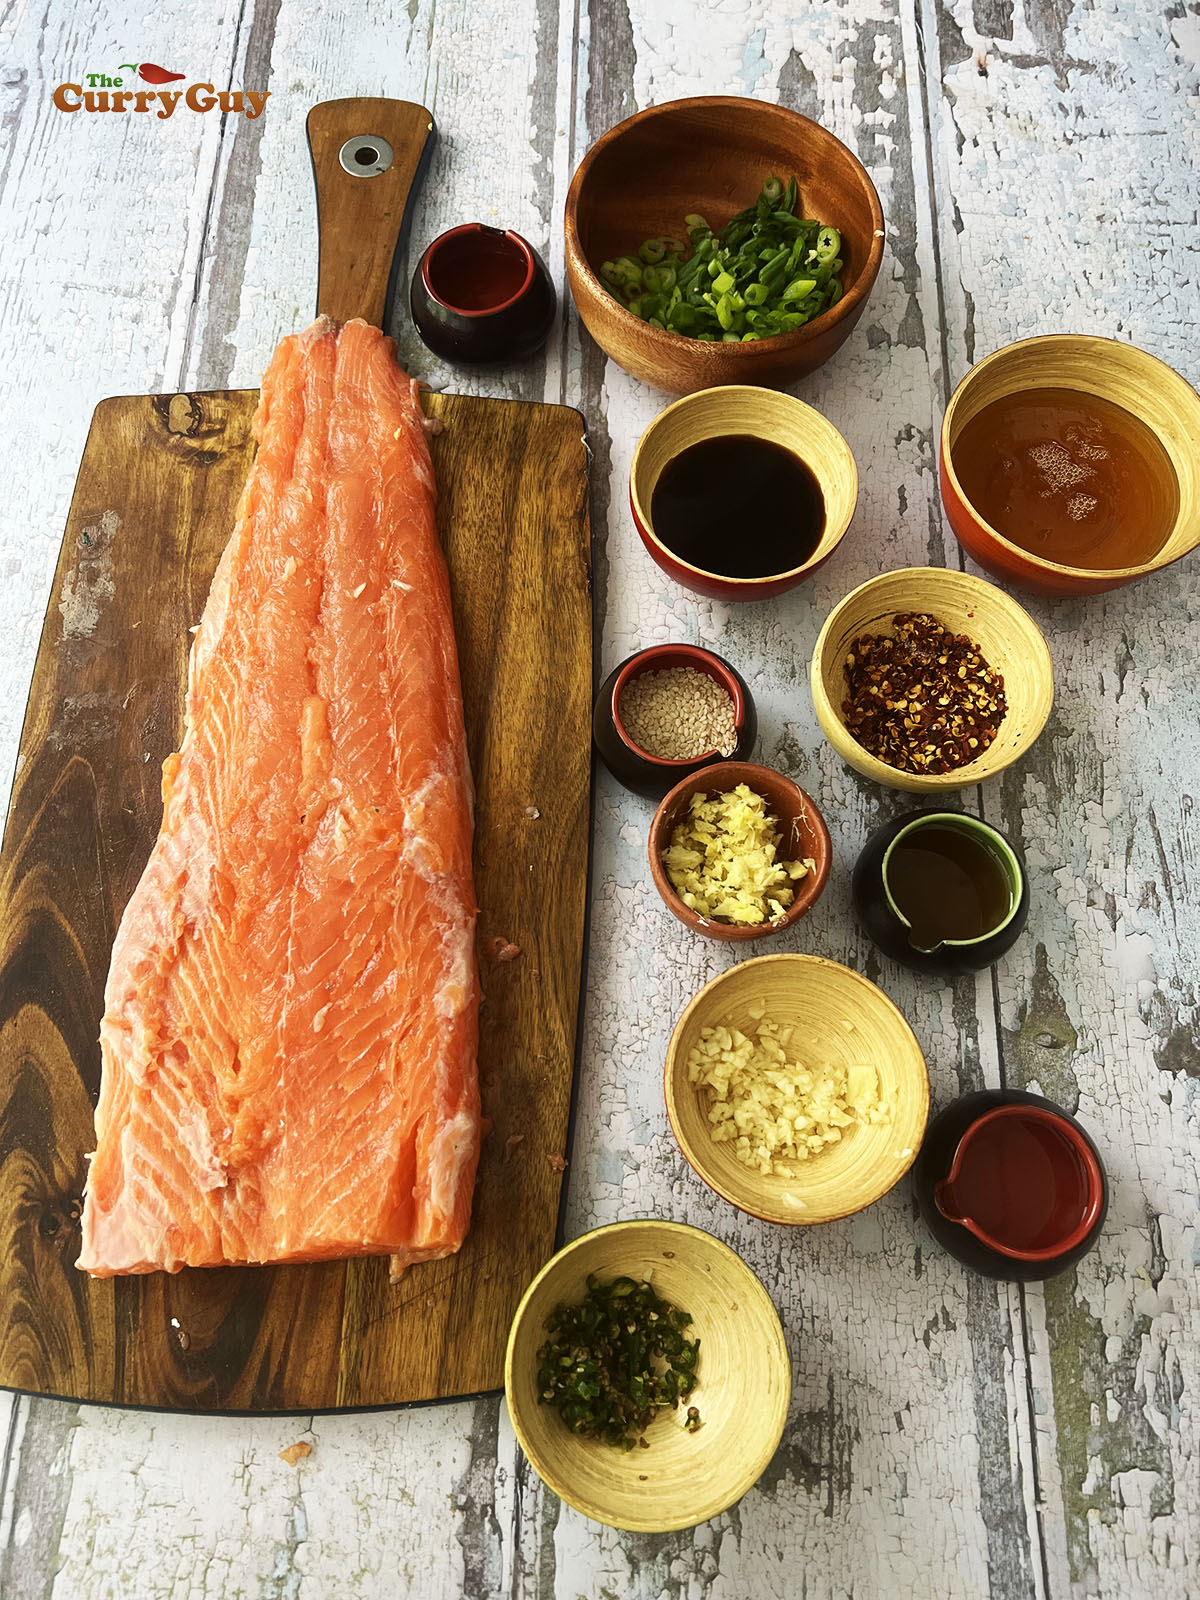 Ingredients for honey glazed baked salmon